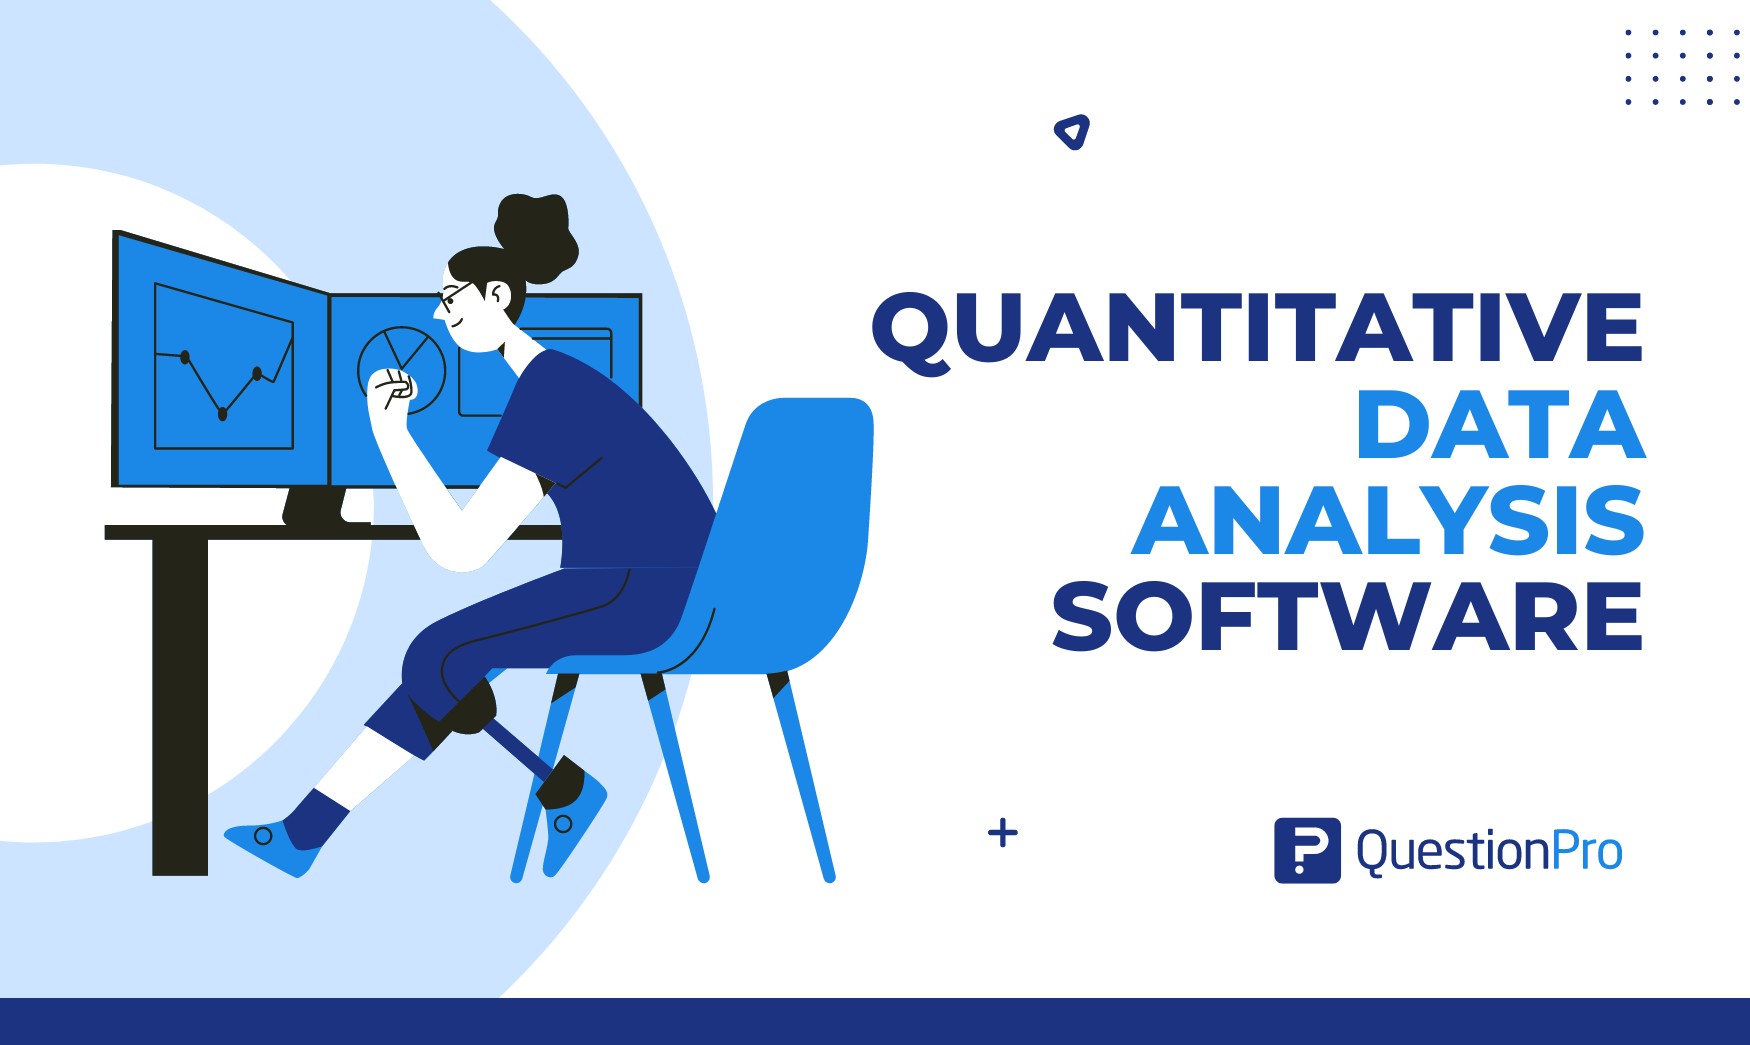 10 Quantitative Data Analysis Software for Every Data Scientist